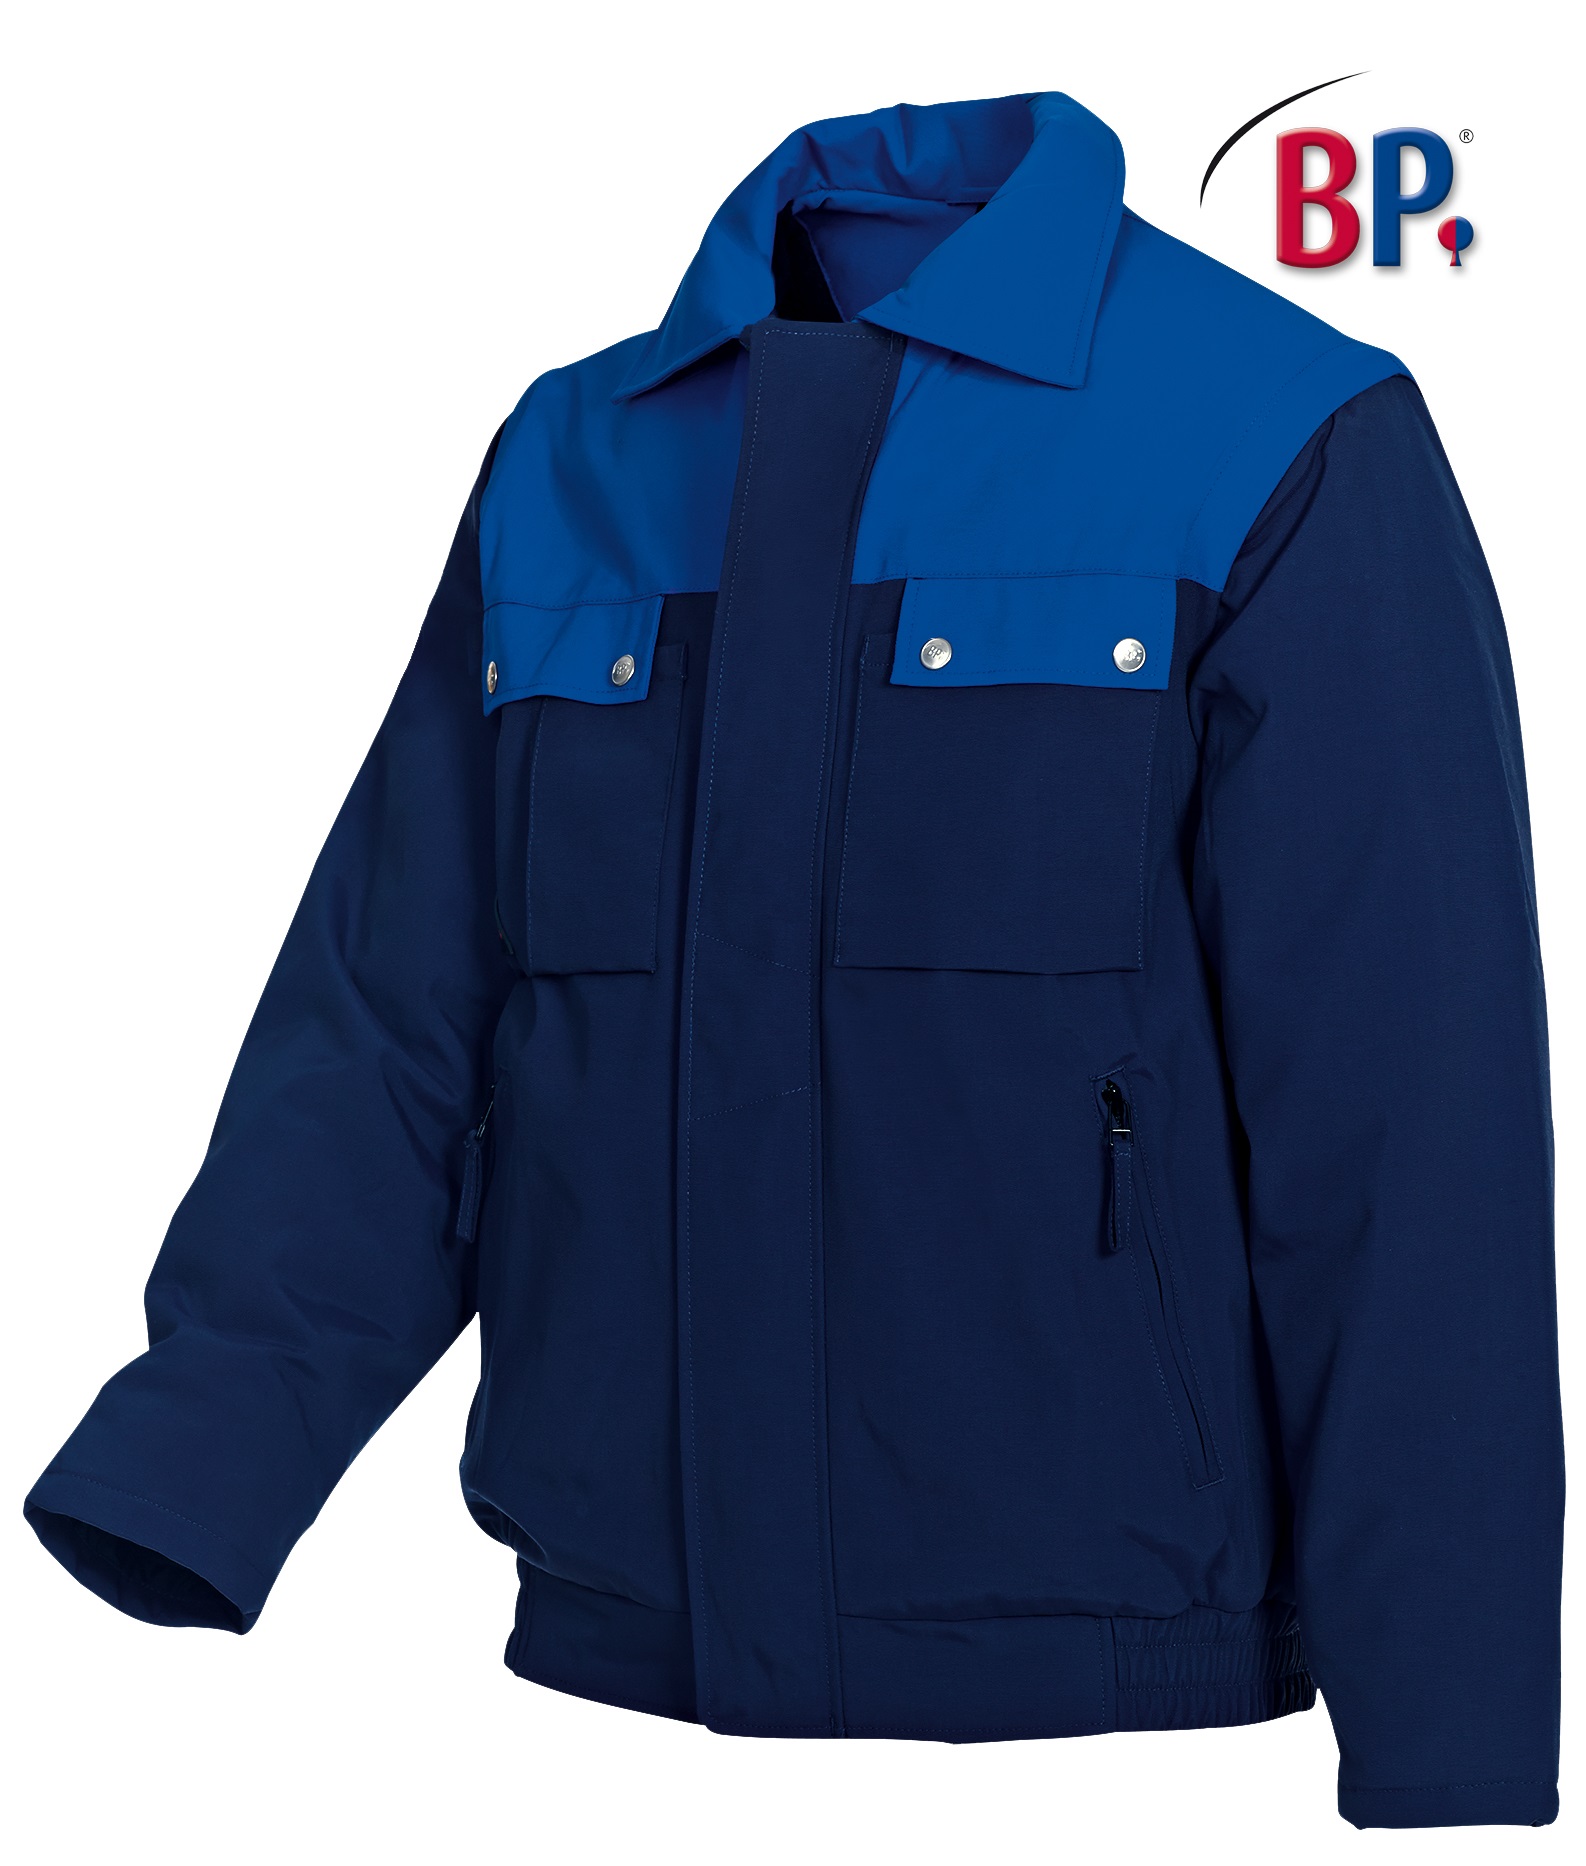 BP Winterjacke Arbeitsjacke Schutzjacke dunkelblau königsblau ca 230 g